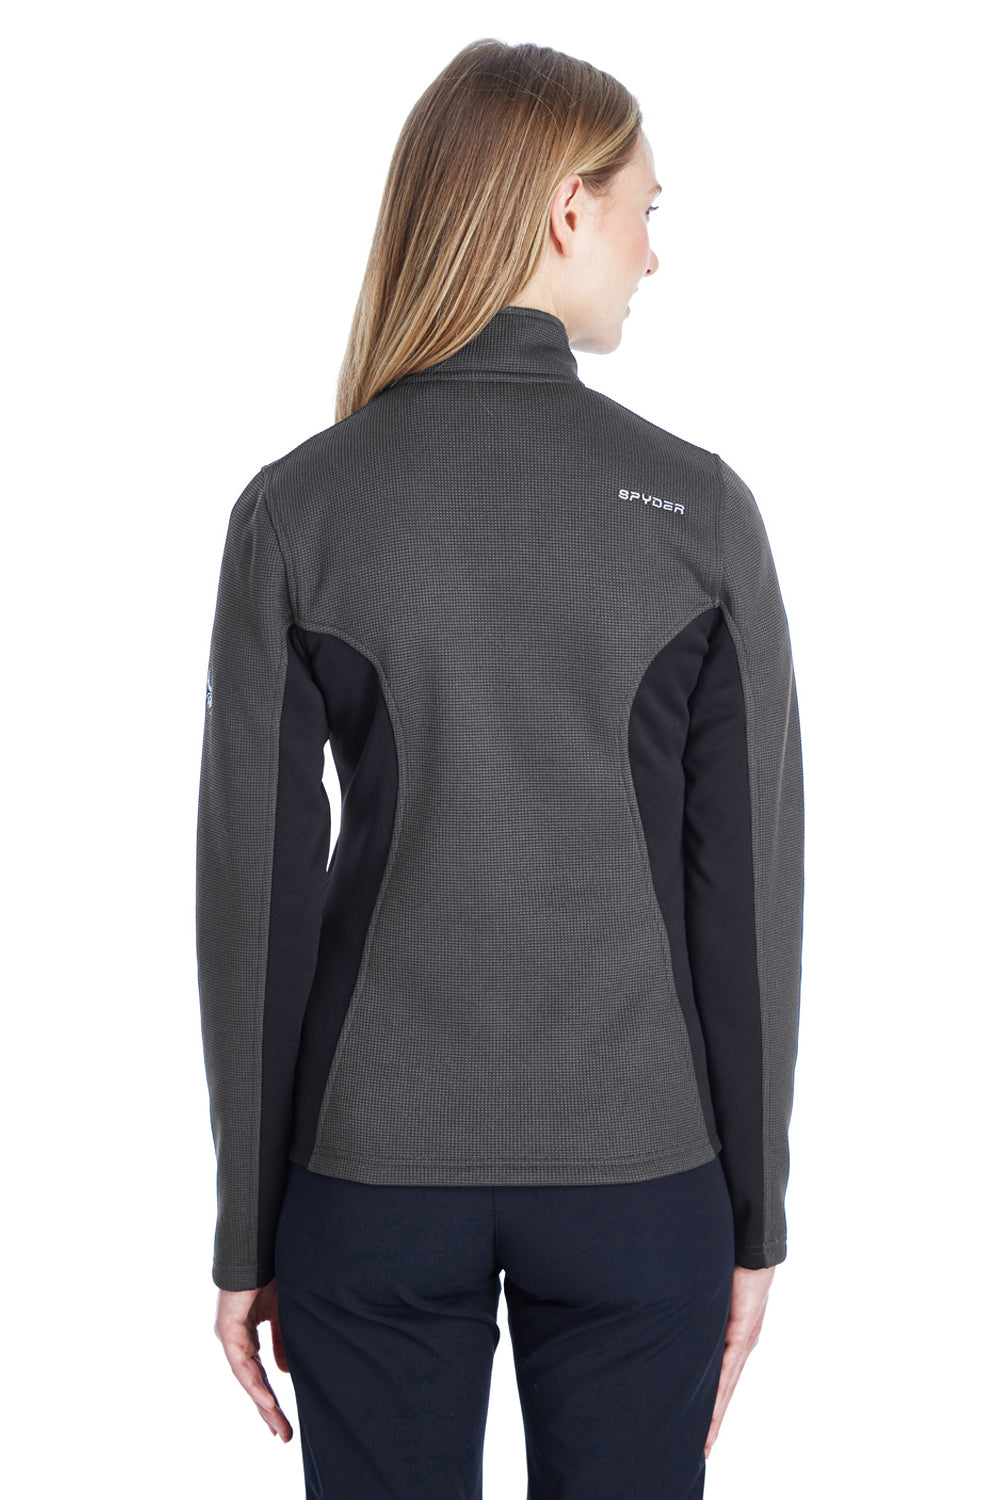 Spyder 187335 Womens Constant Full Zip Sweater Fleece Jacket Polar Grey Back